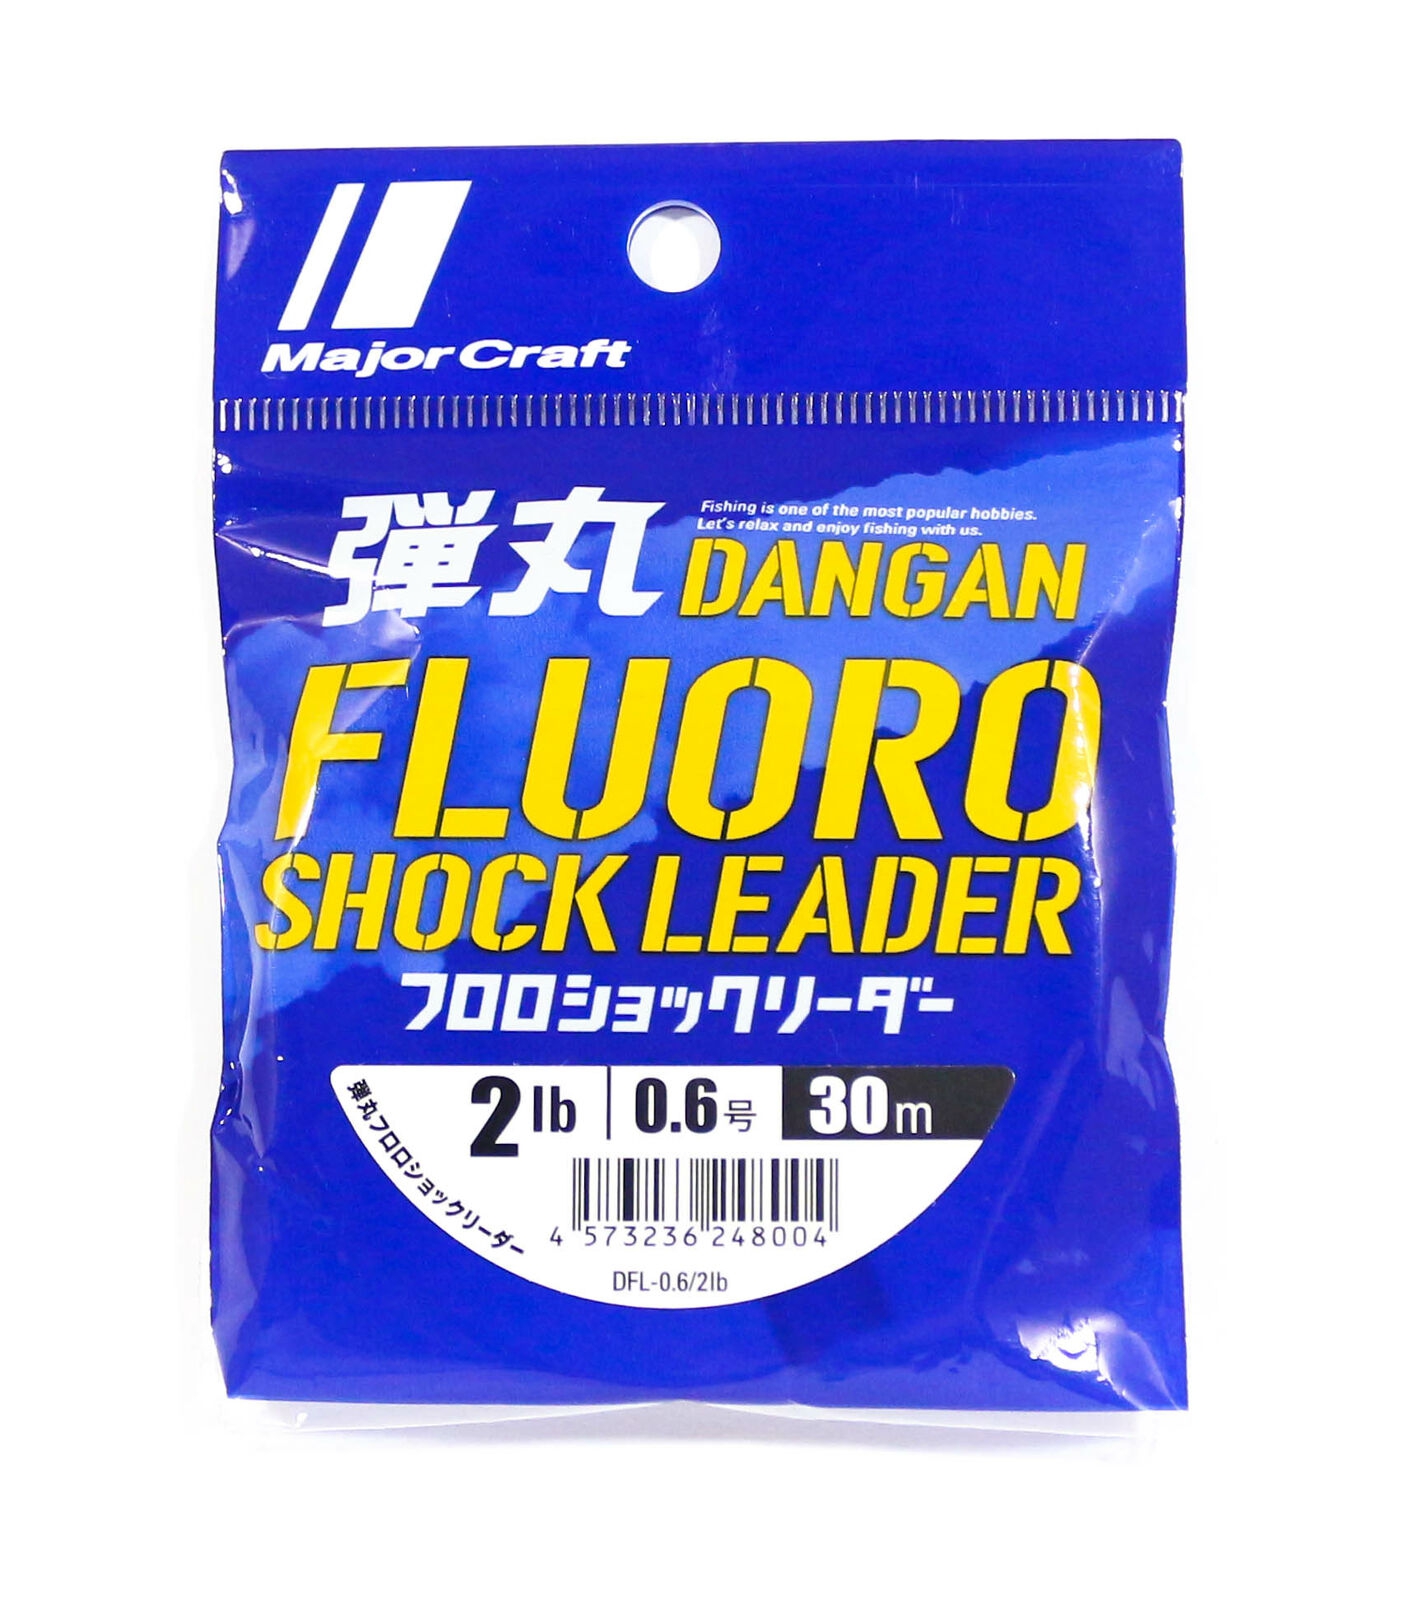 Major Craft Dangan Fluoro Shock Leader 30m #2lb*สายลีดฟลูออโรคาร์บอน - 7  SEAS PROSHOP (THAILAND)